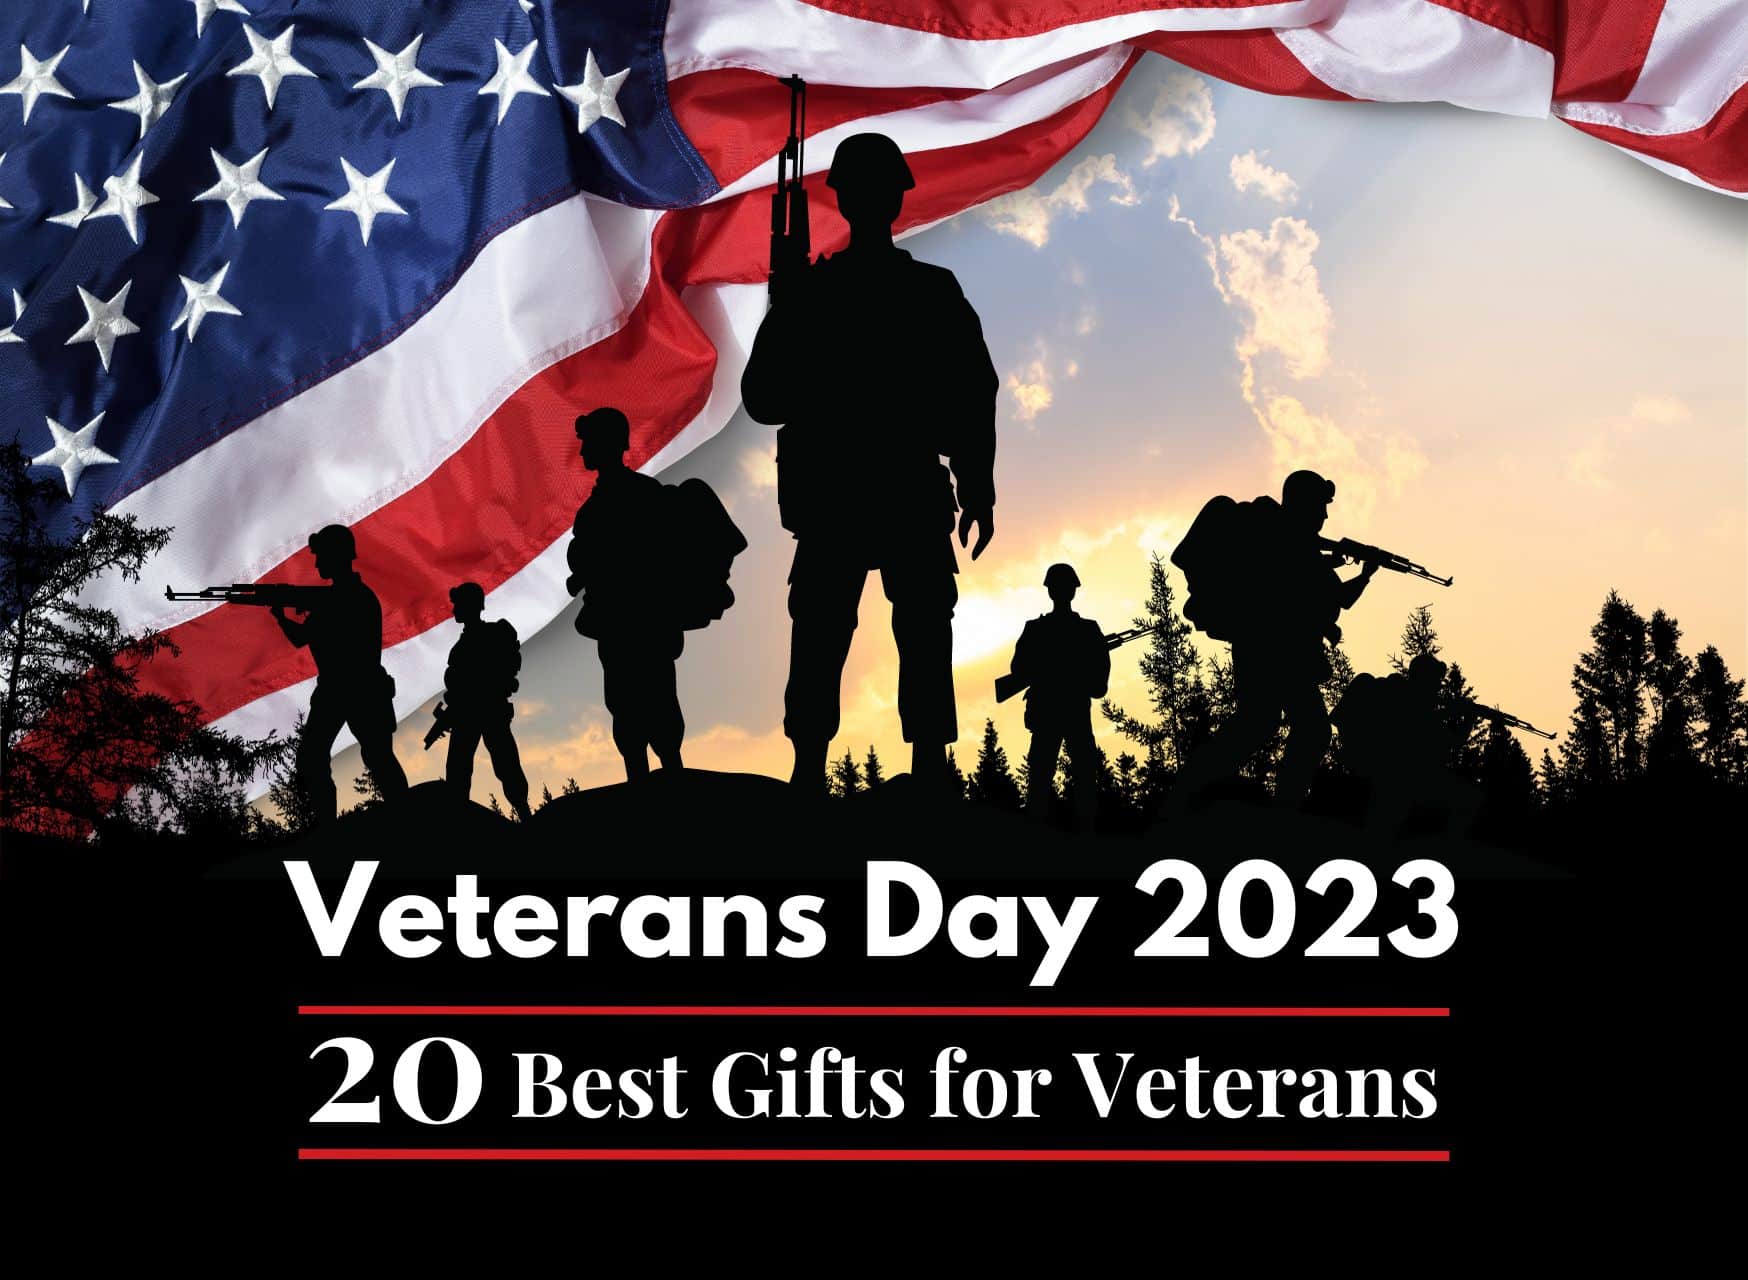 Veterans Day 2023 - Veterans Day 2023 | Cubebik Blog